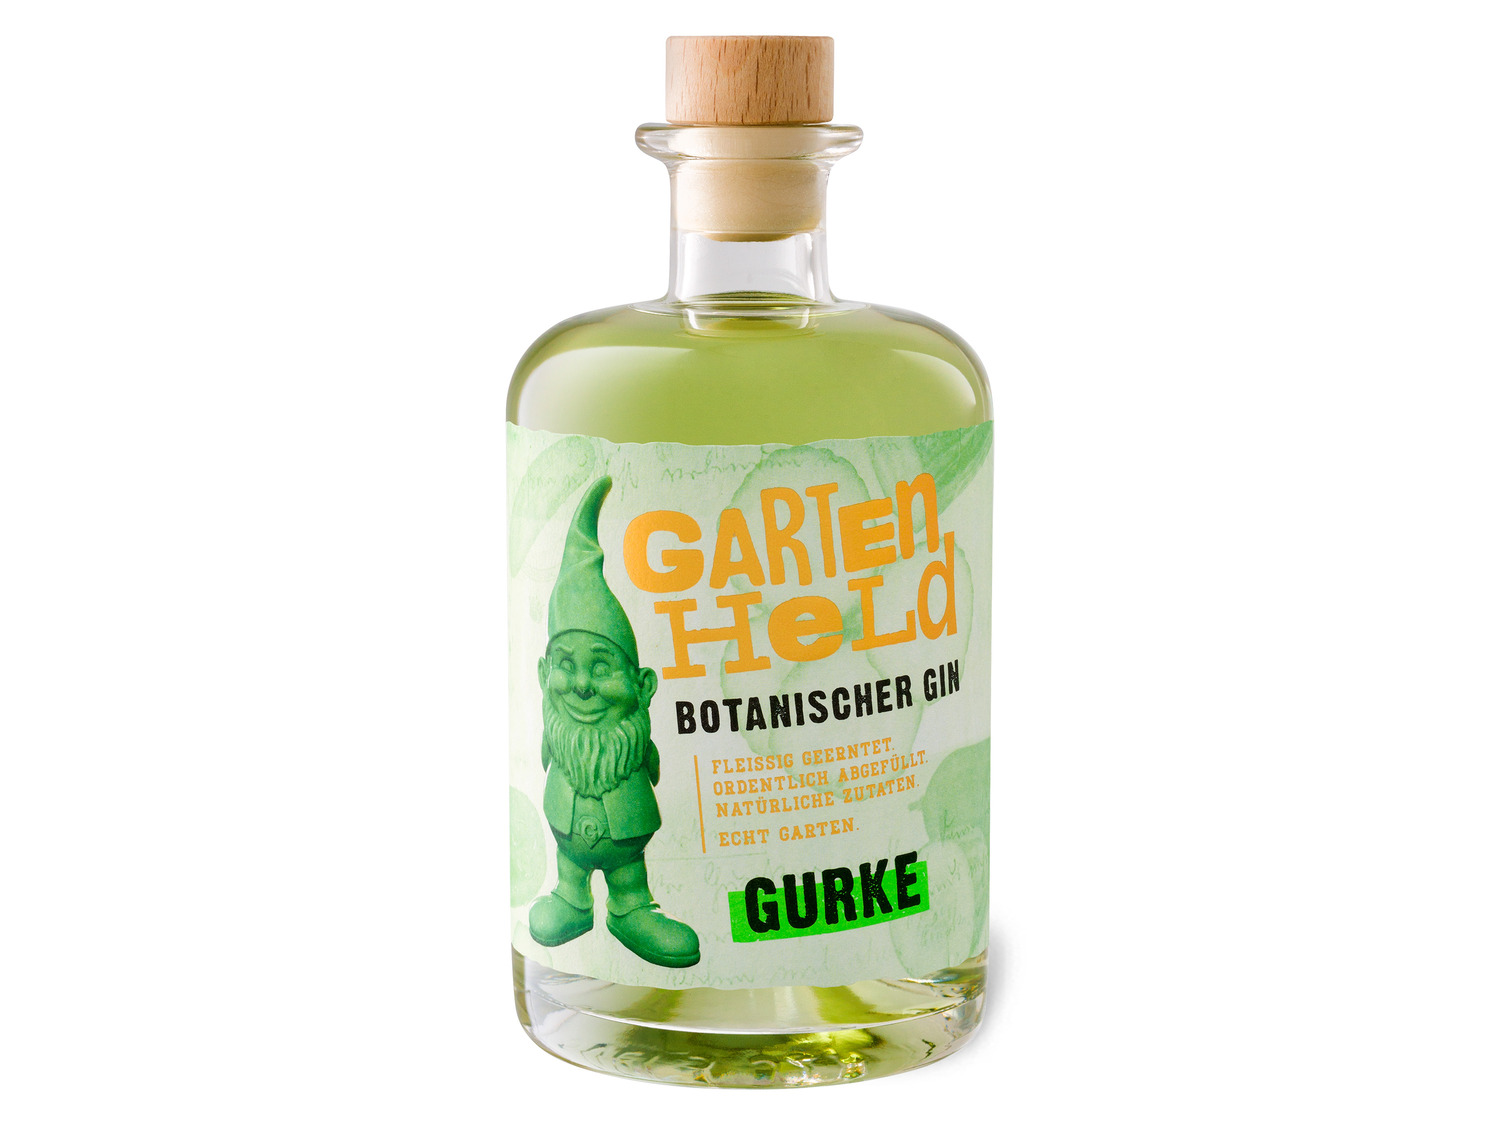 Gartenheld Botanischer Gin Gurke Vol 37 5